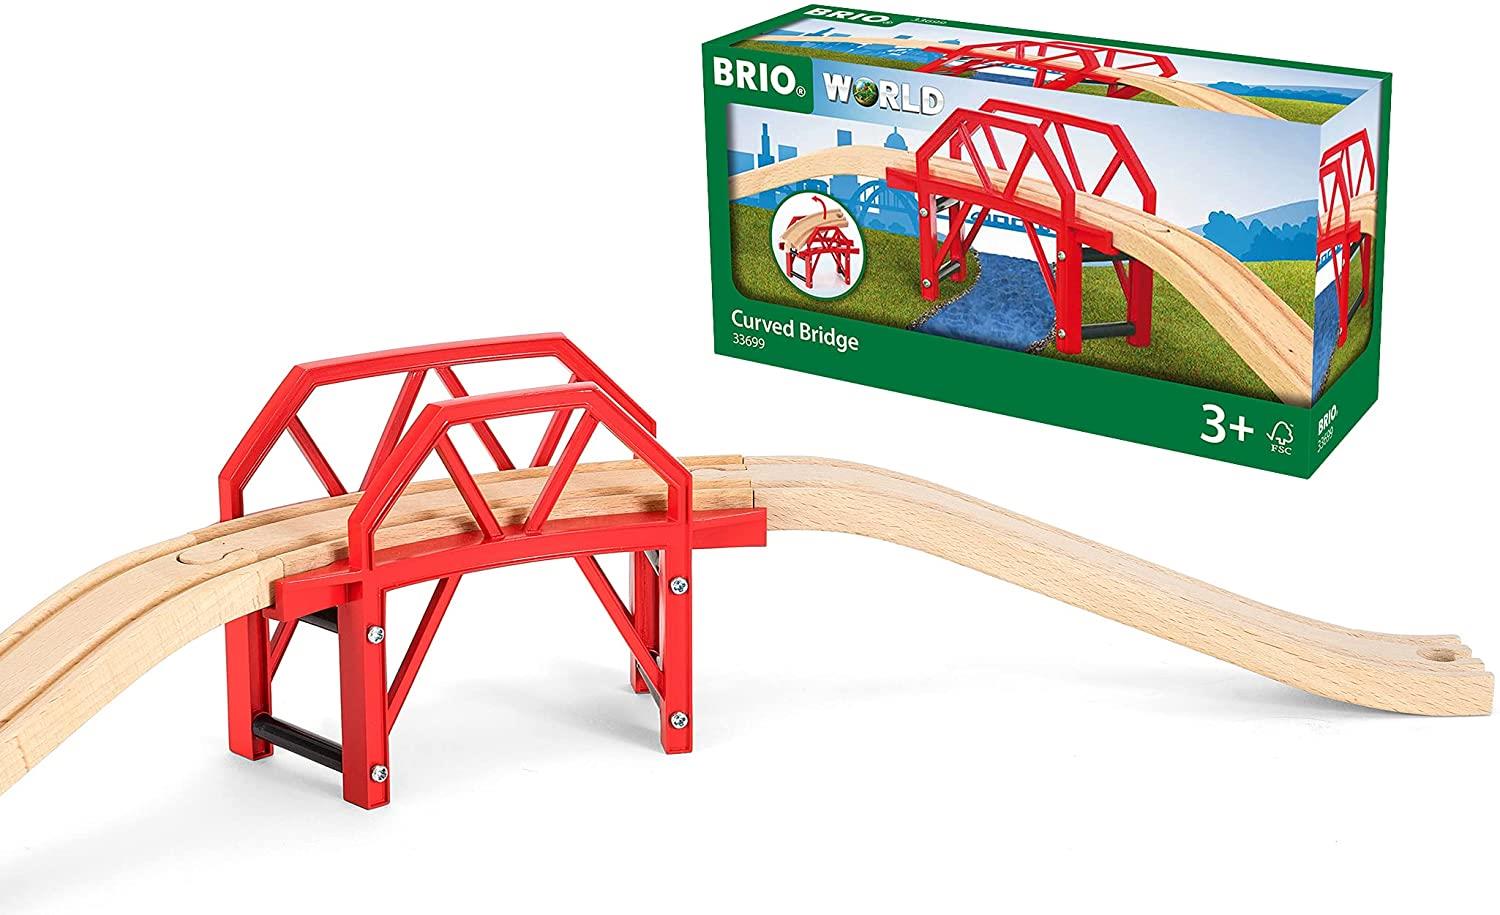 Brio World 33699 Curved Bridge